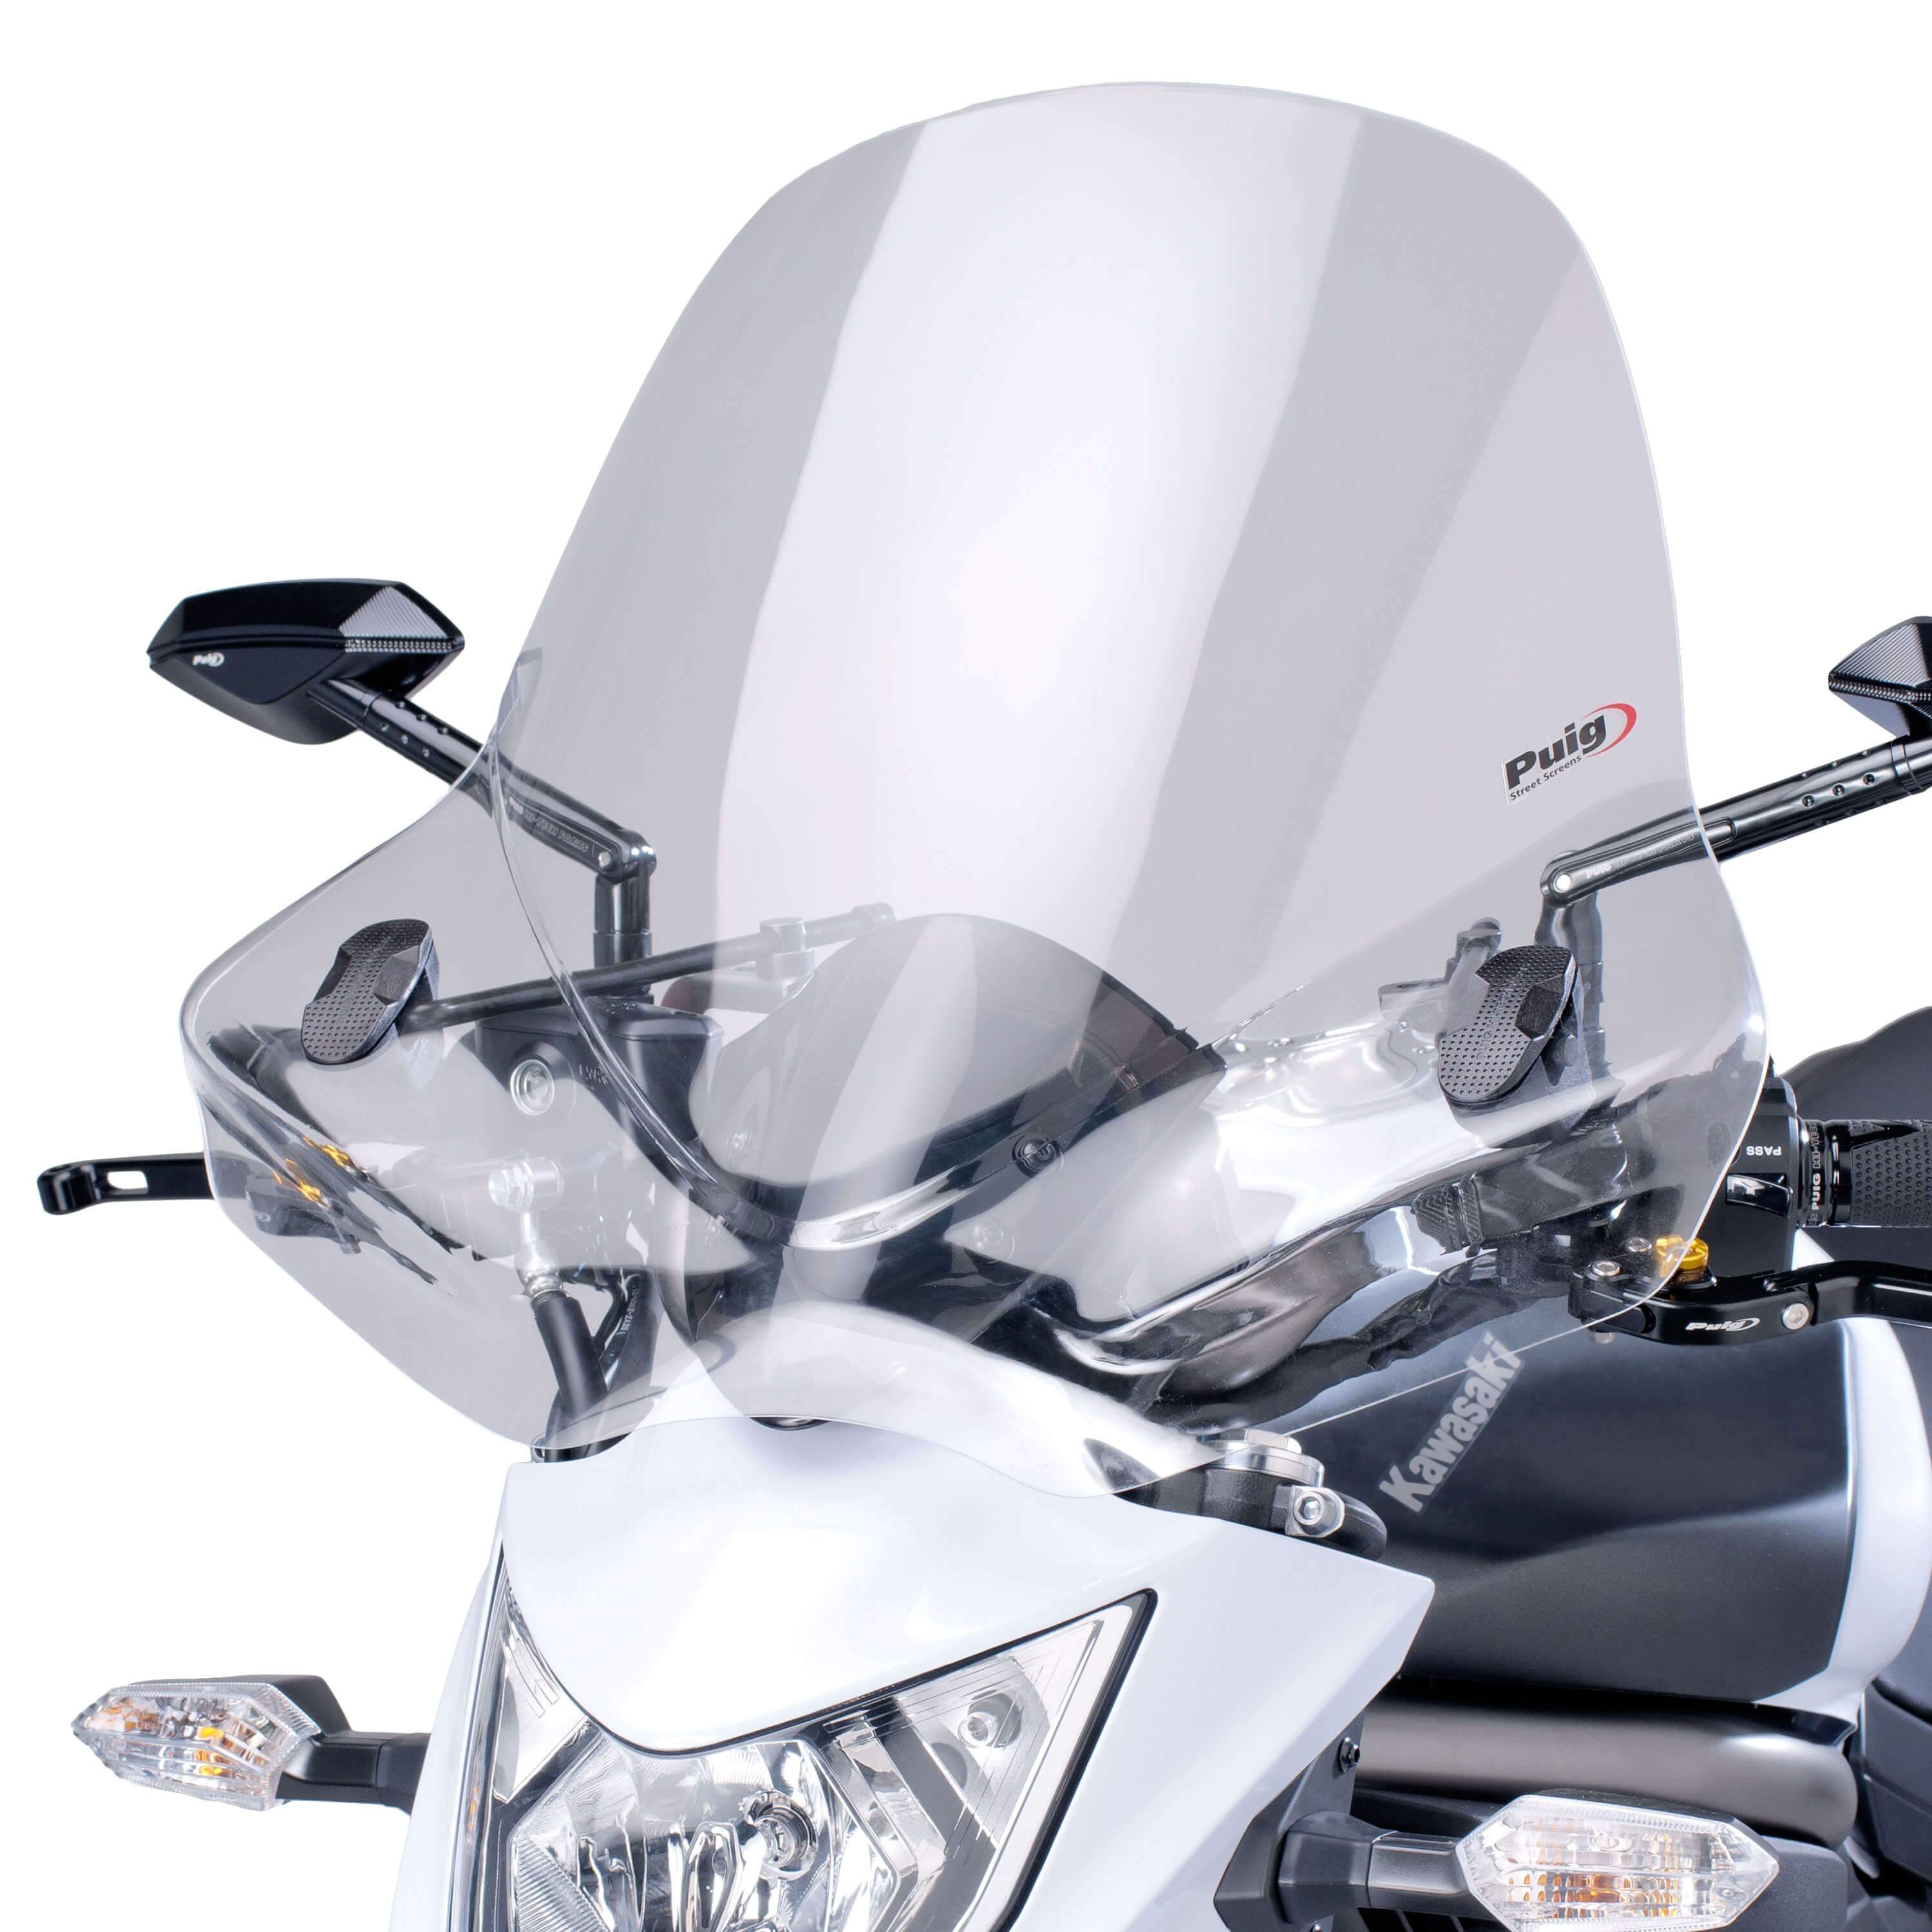 Puig Touring 2 Screen | Clear | Suzuki GSR 750 2011>2016-M5267W-Screens-Pyramid Motorcycle Accessories